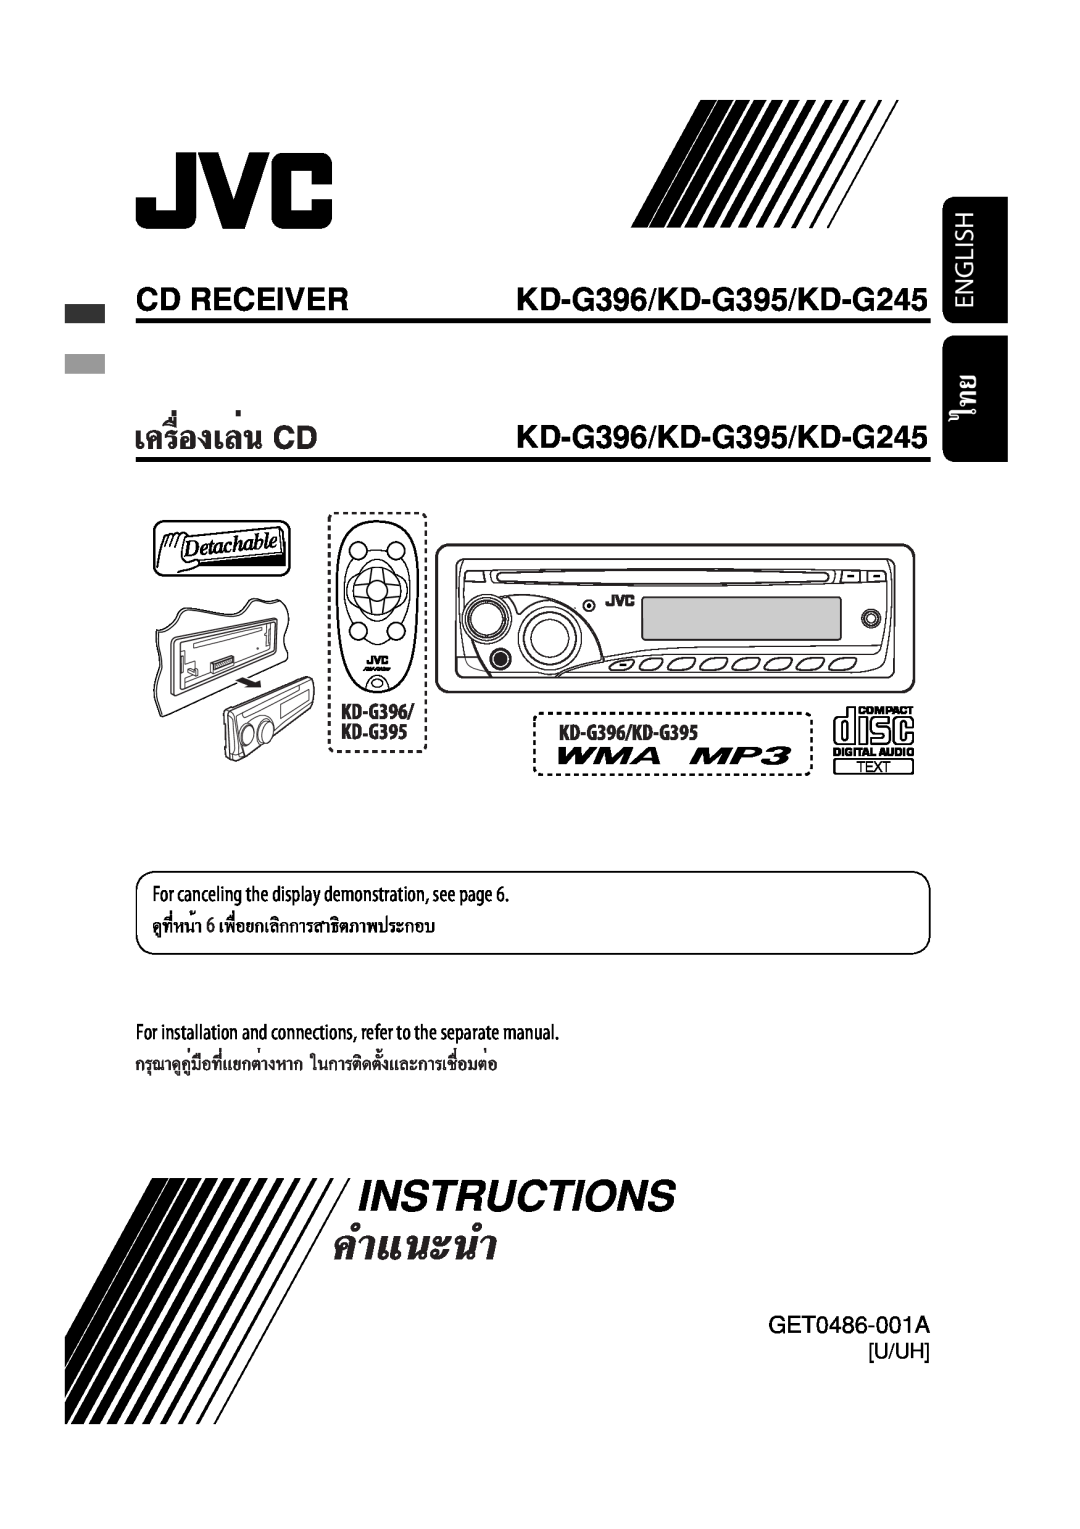 JVC MA372IEN Instructions, Cd Receiver, KD-G396/KD-G395/KD-G245 KD-G396/KD-G395/KD-G245, English, GET0486-001A, U/Uh 